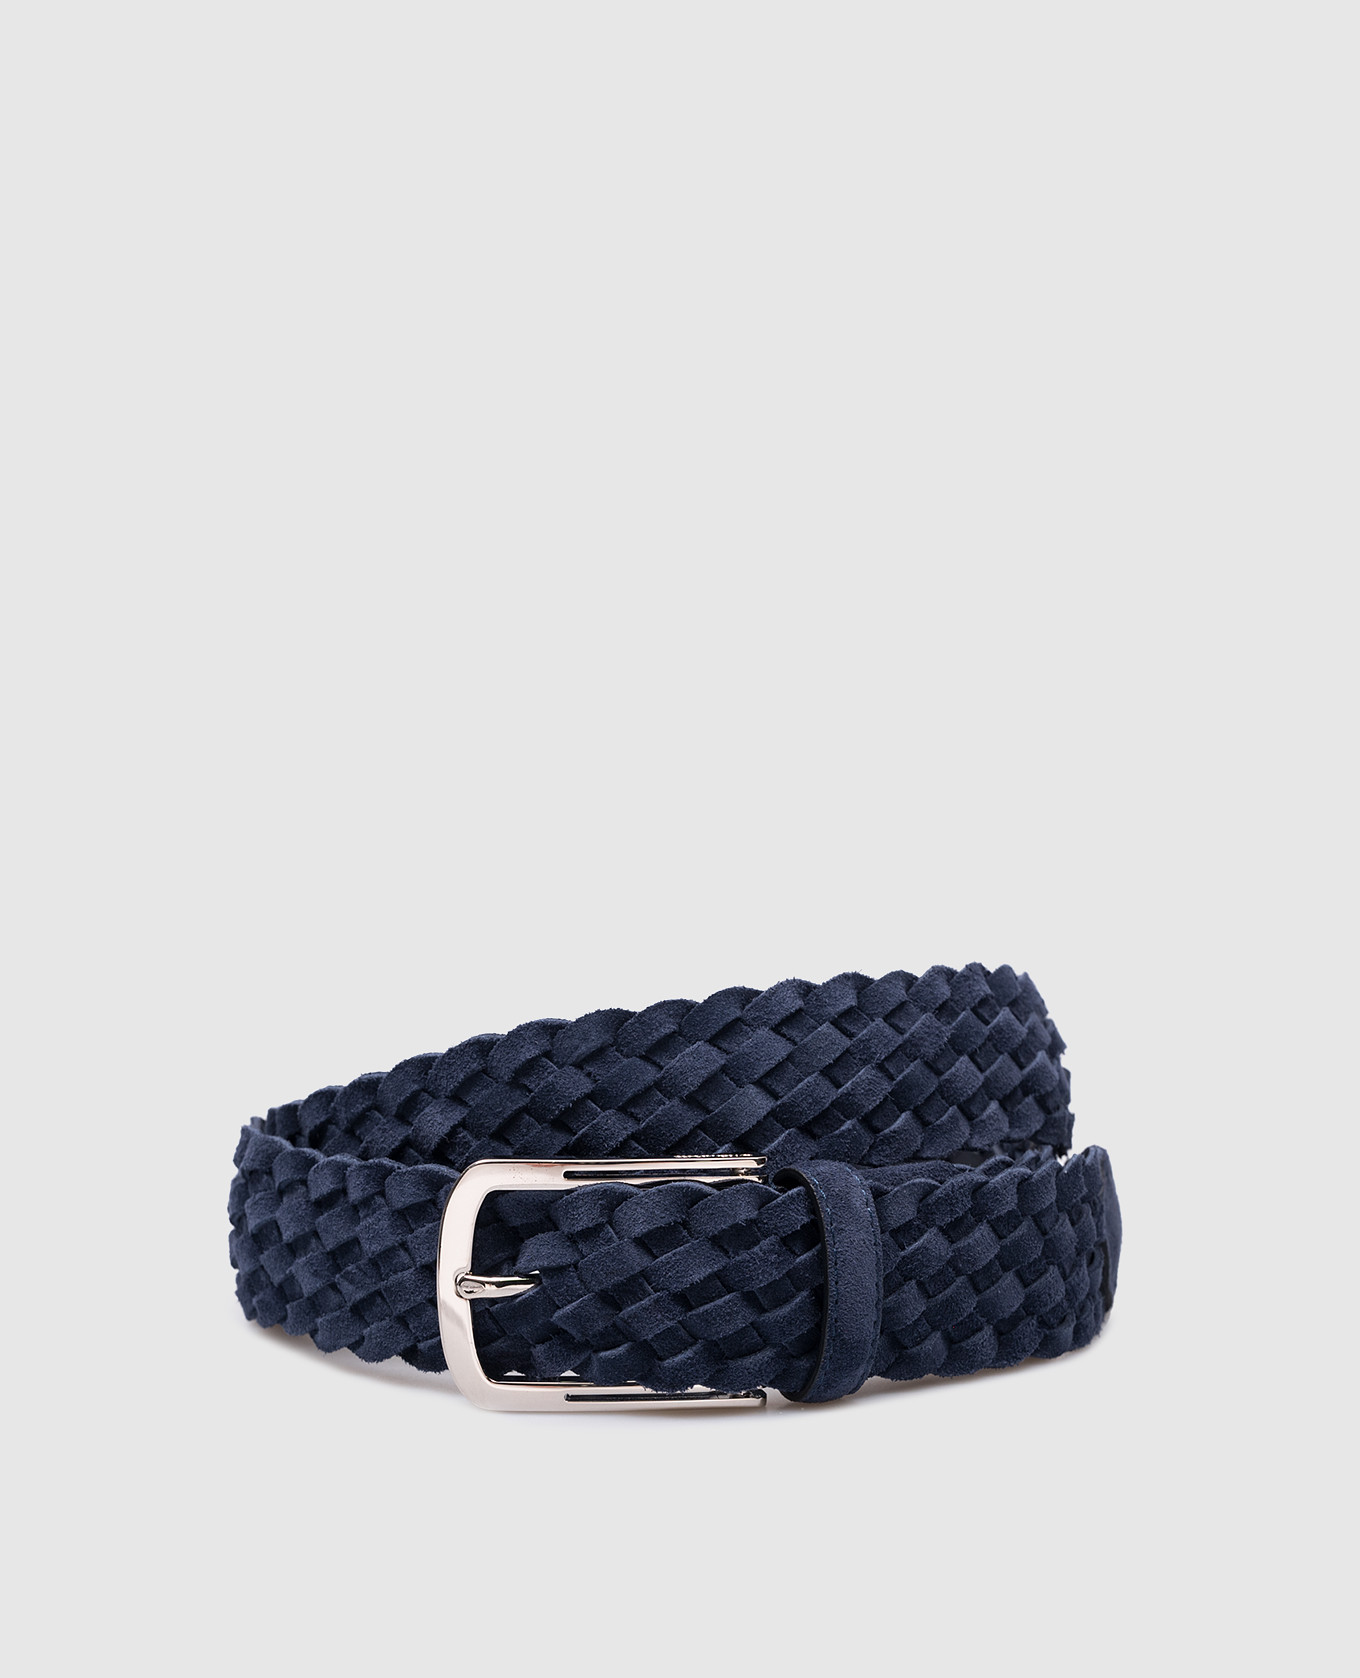 Blue suede belt with logo weave